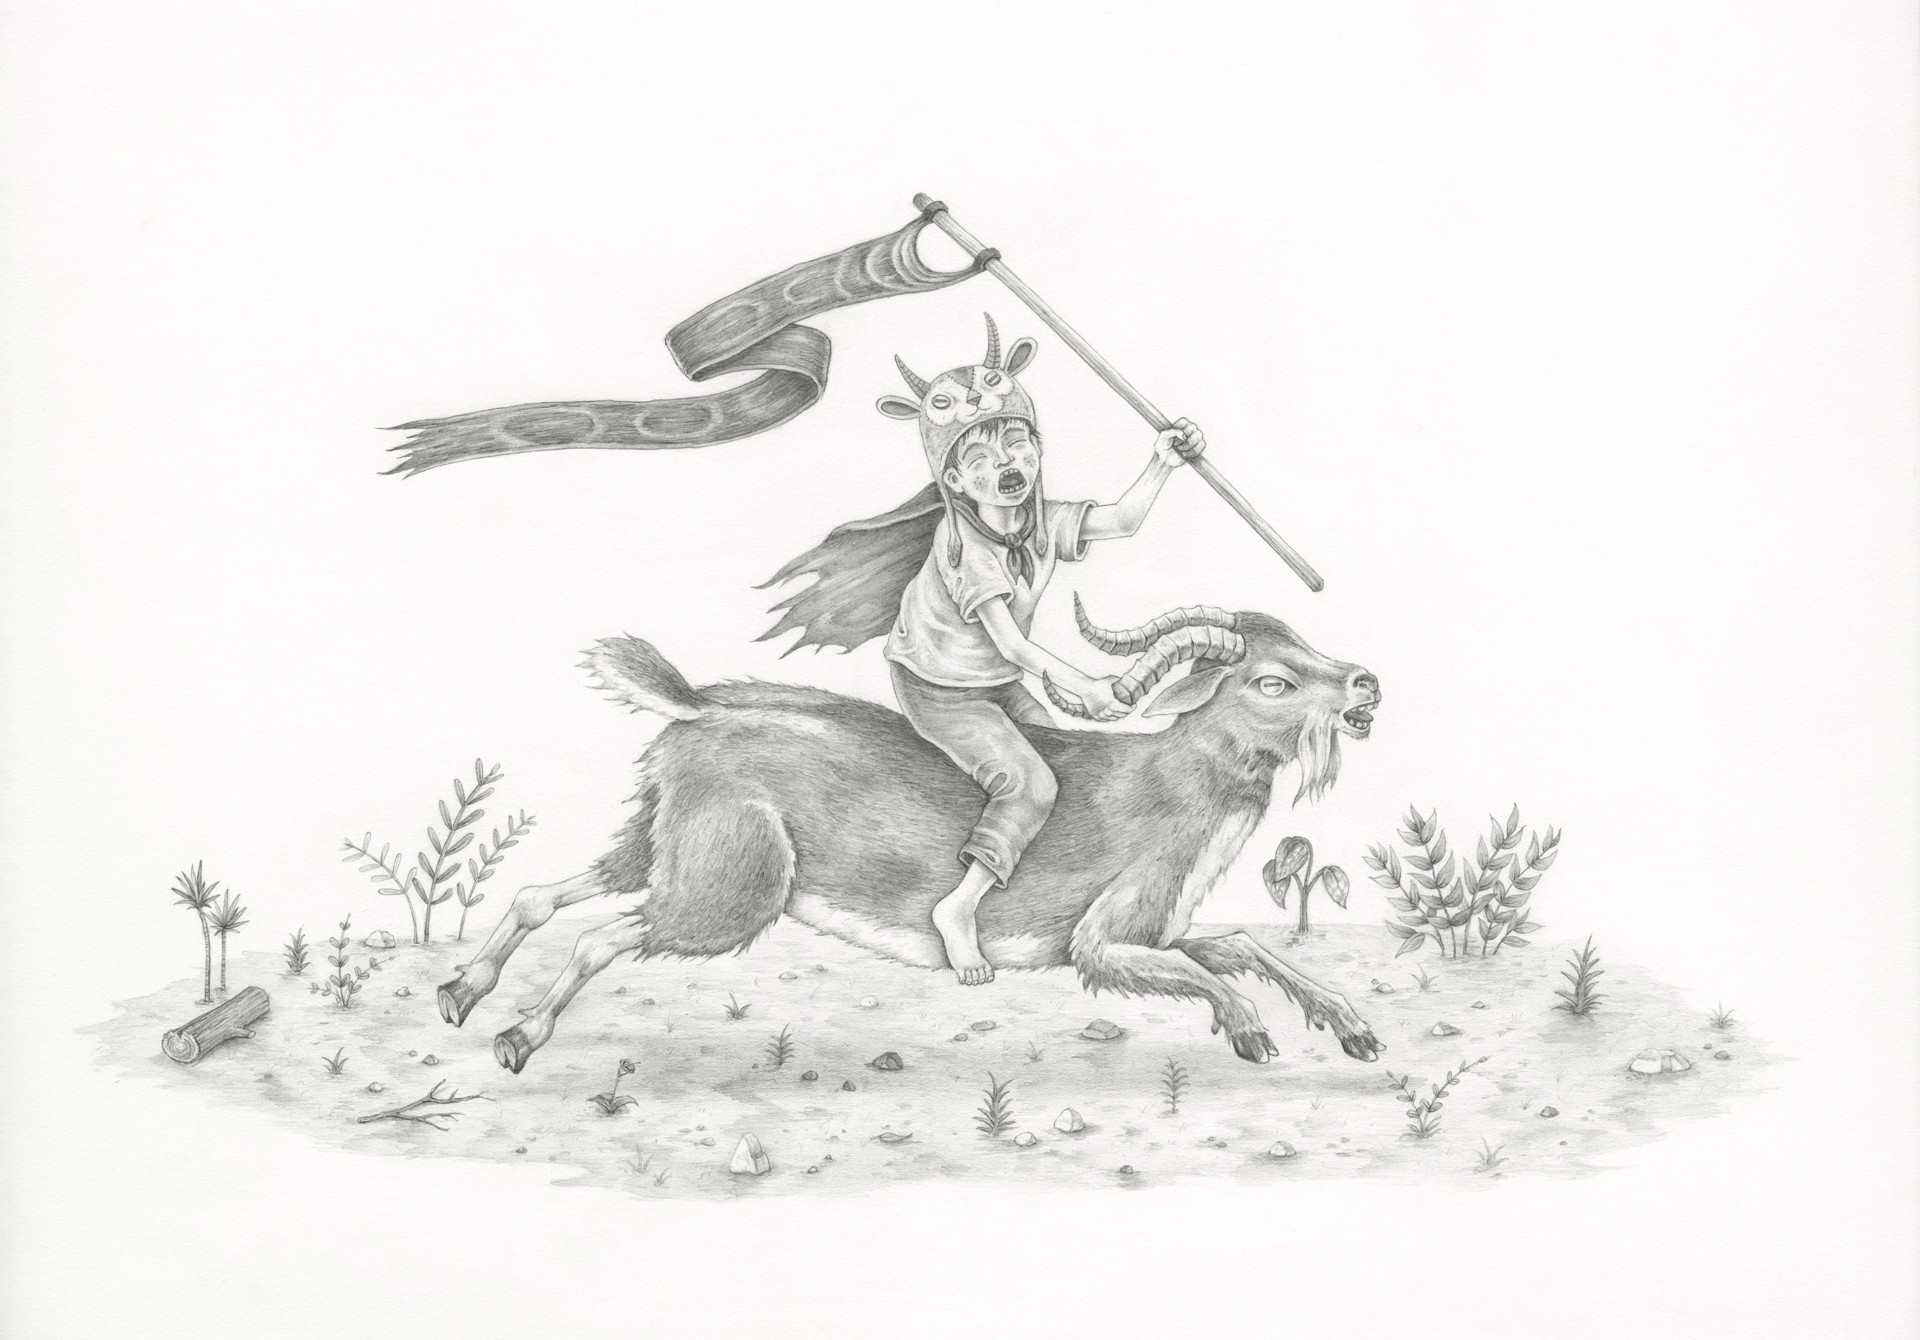 Goat Rider by Mark Hosford